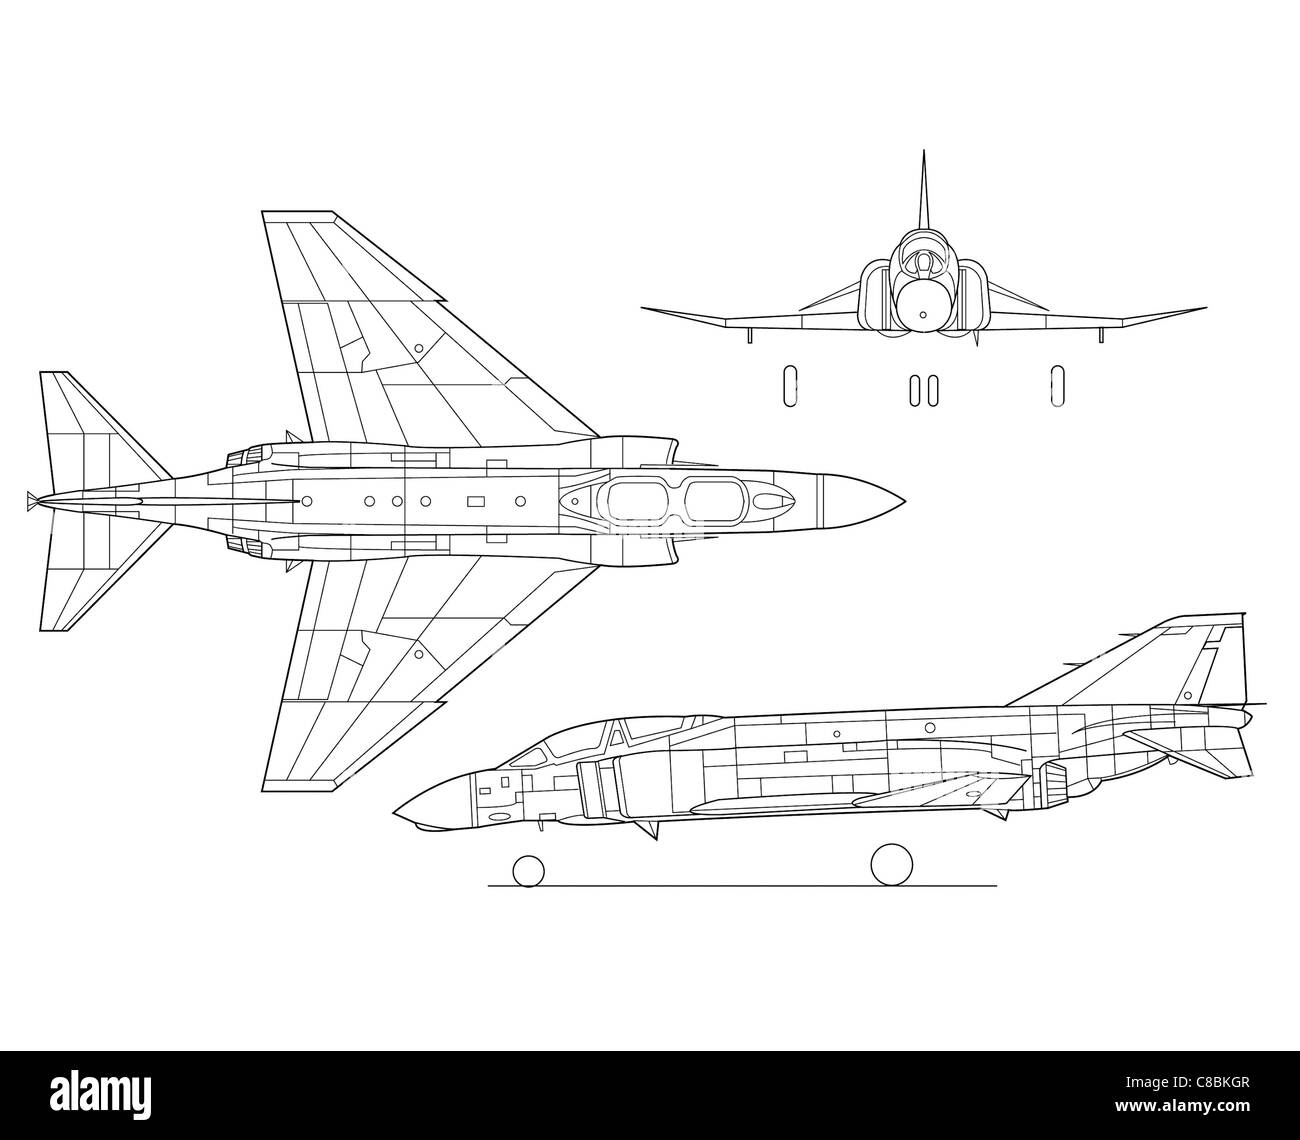 3 view aircraft line art drawing F-4A Phantom II Stock Photo - Alamy